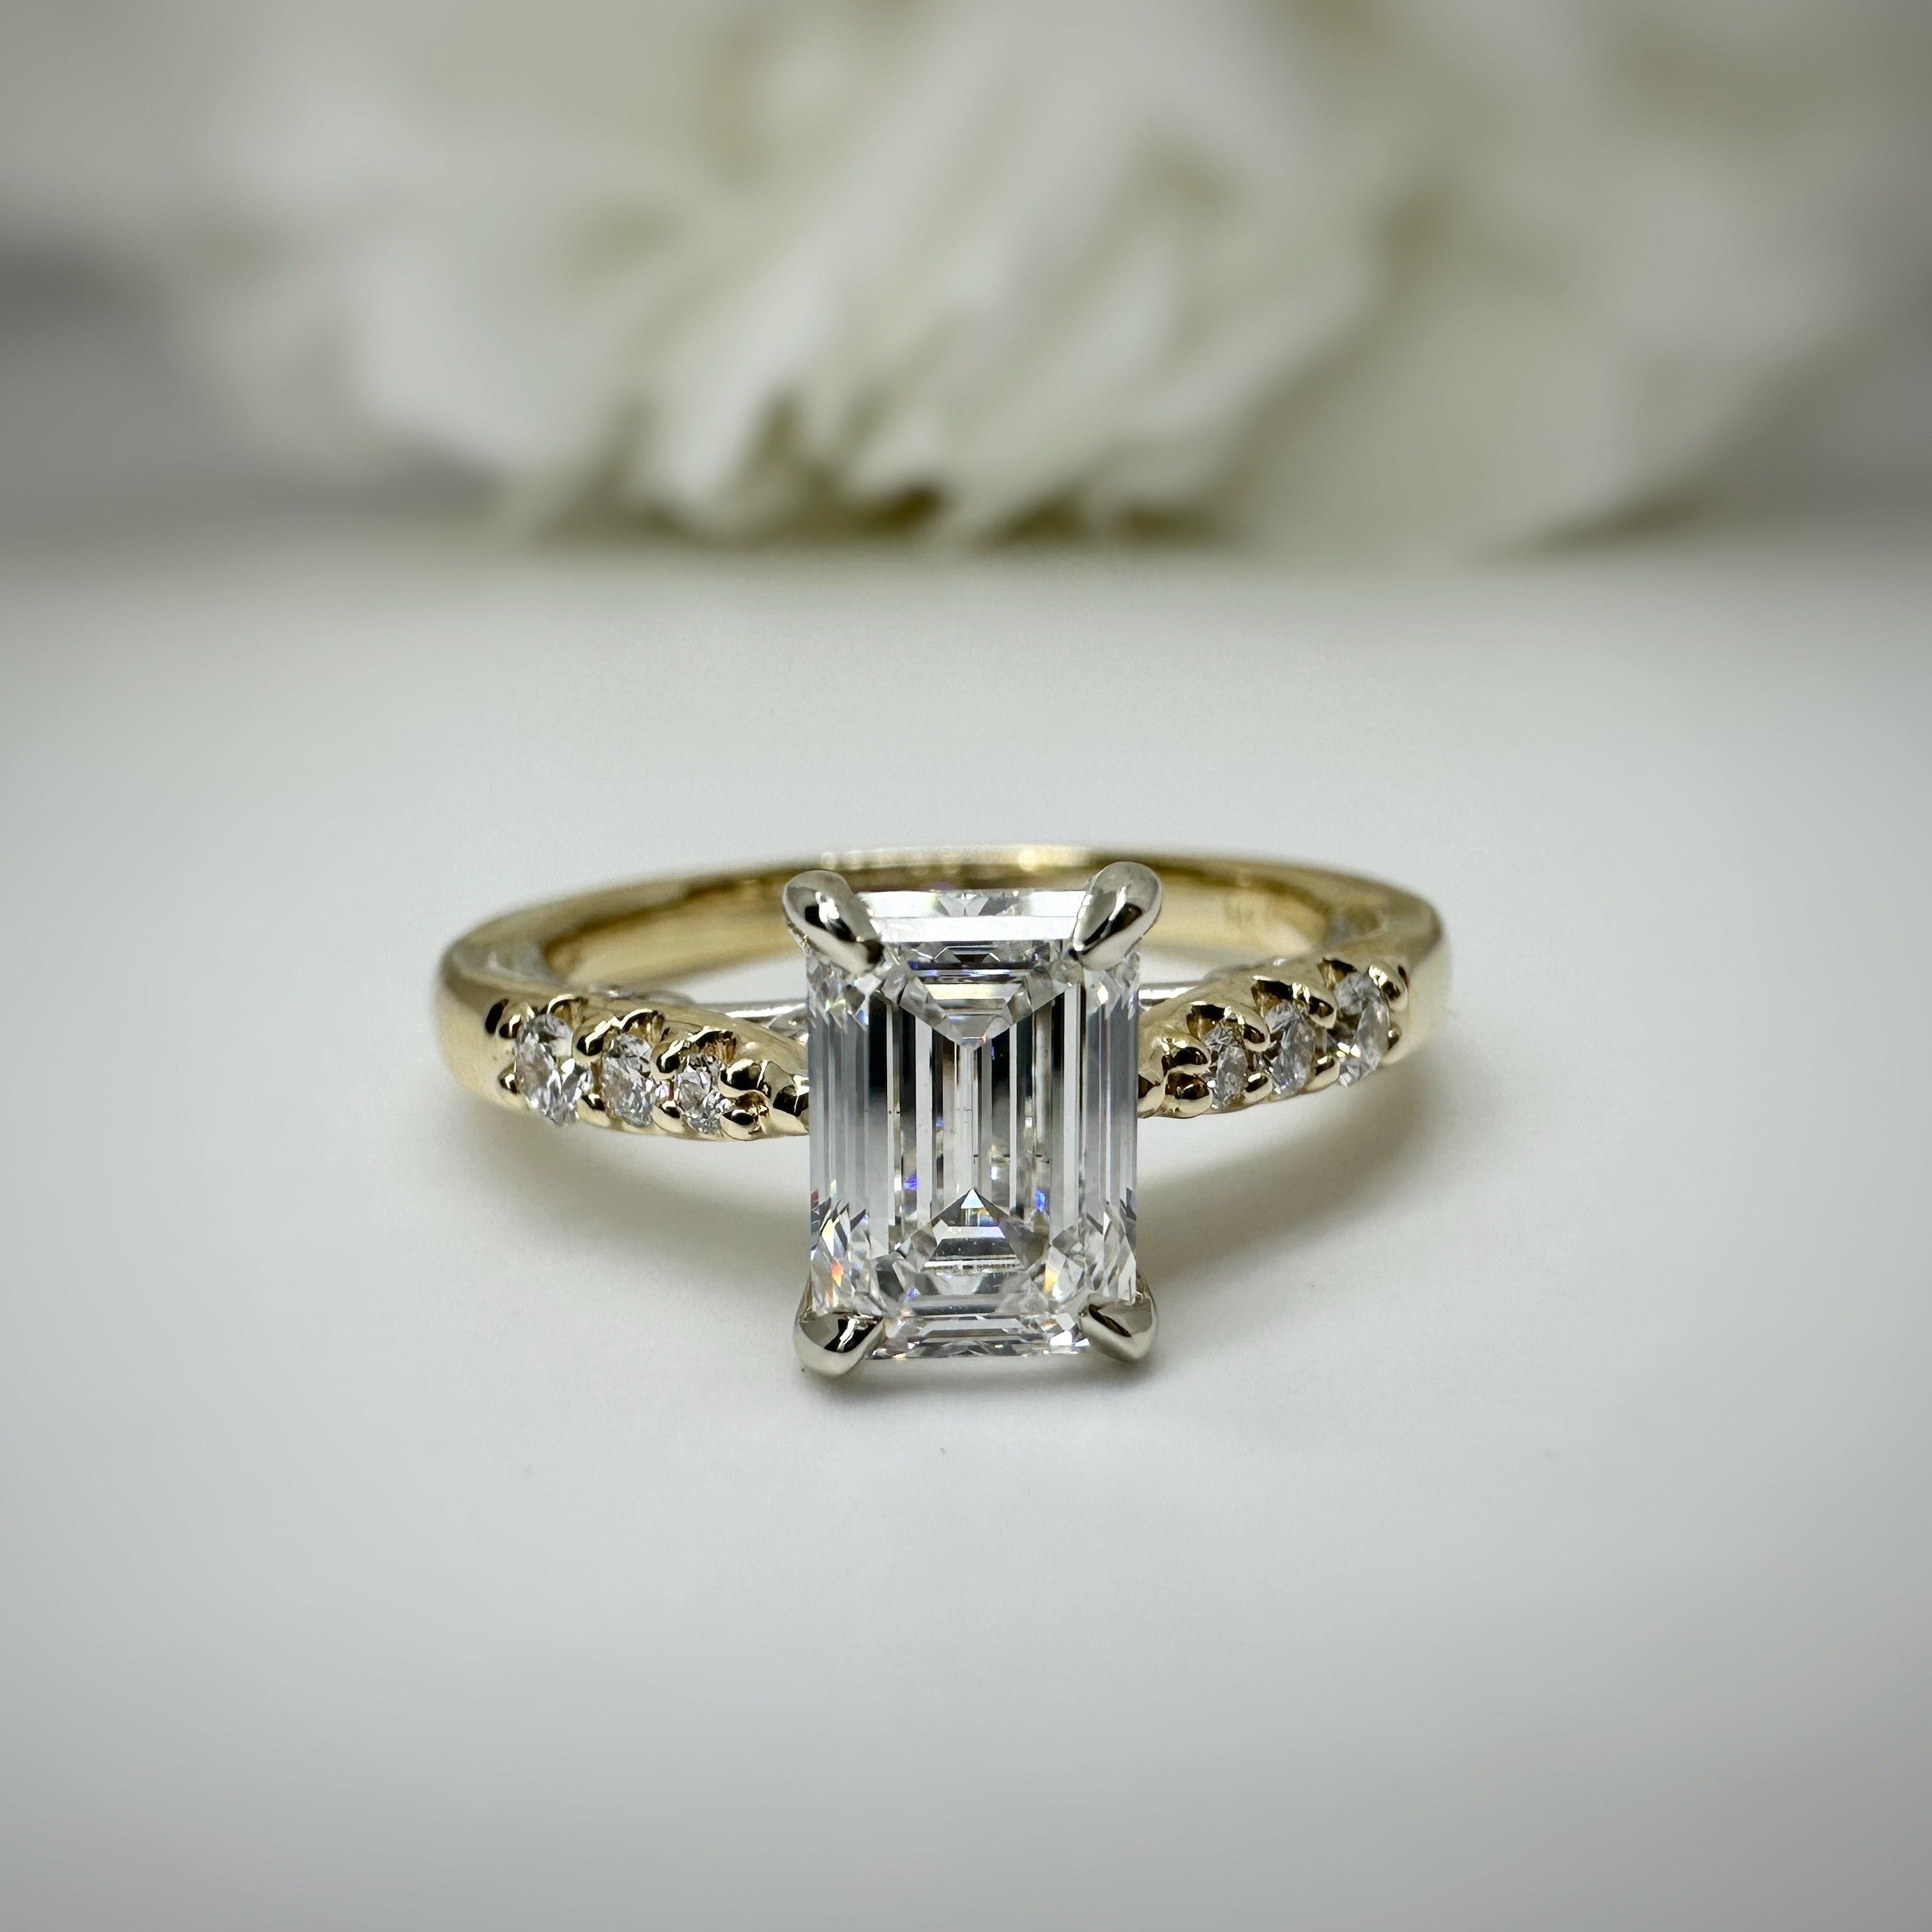 14k 2 tone Emerald cut Diamond Engagement Ring - Lab Grown